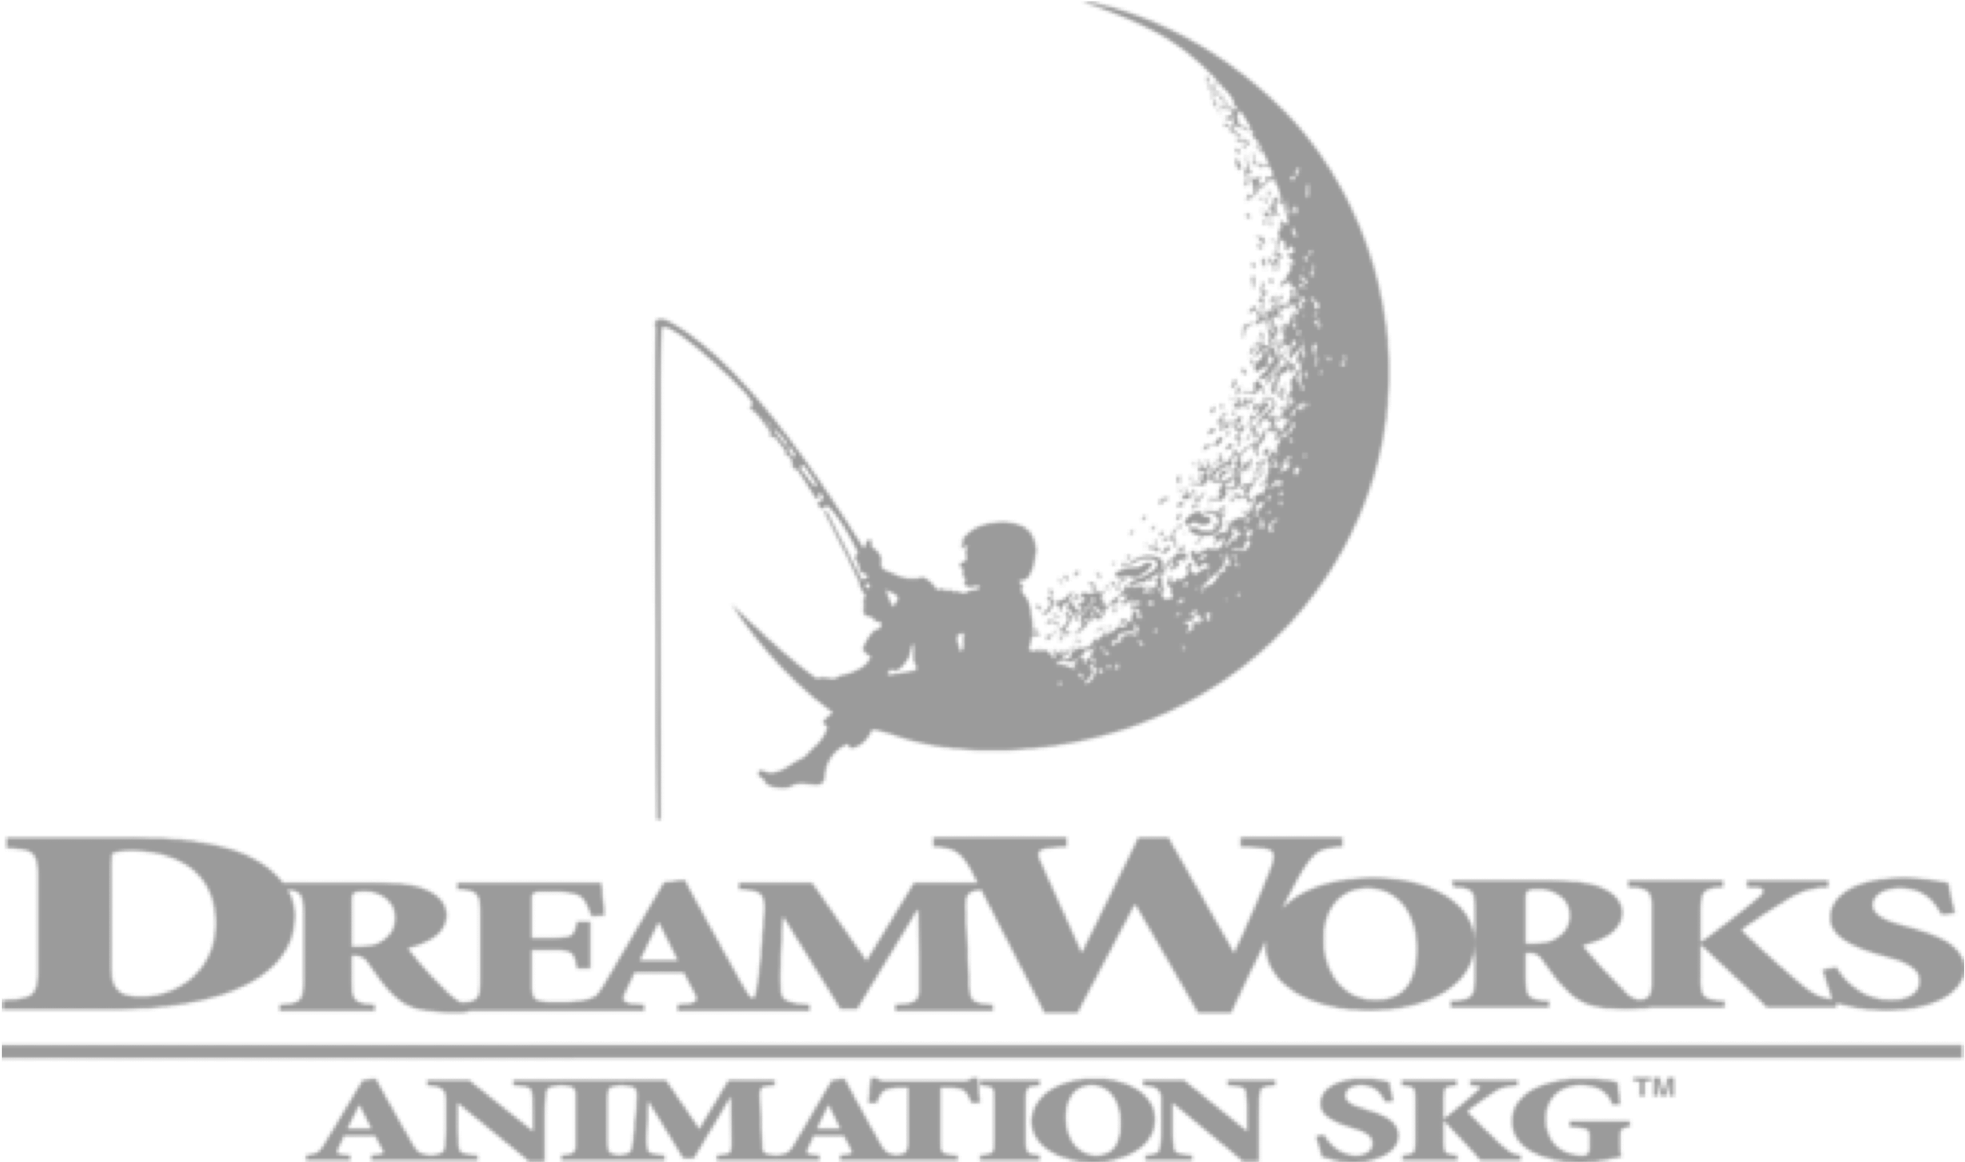 Dreamworks animation логотип. Картинки с Dreamworks. Dreamworks на прозрачном фоне. Значок Дримворкс. Воркс пикчерс